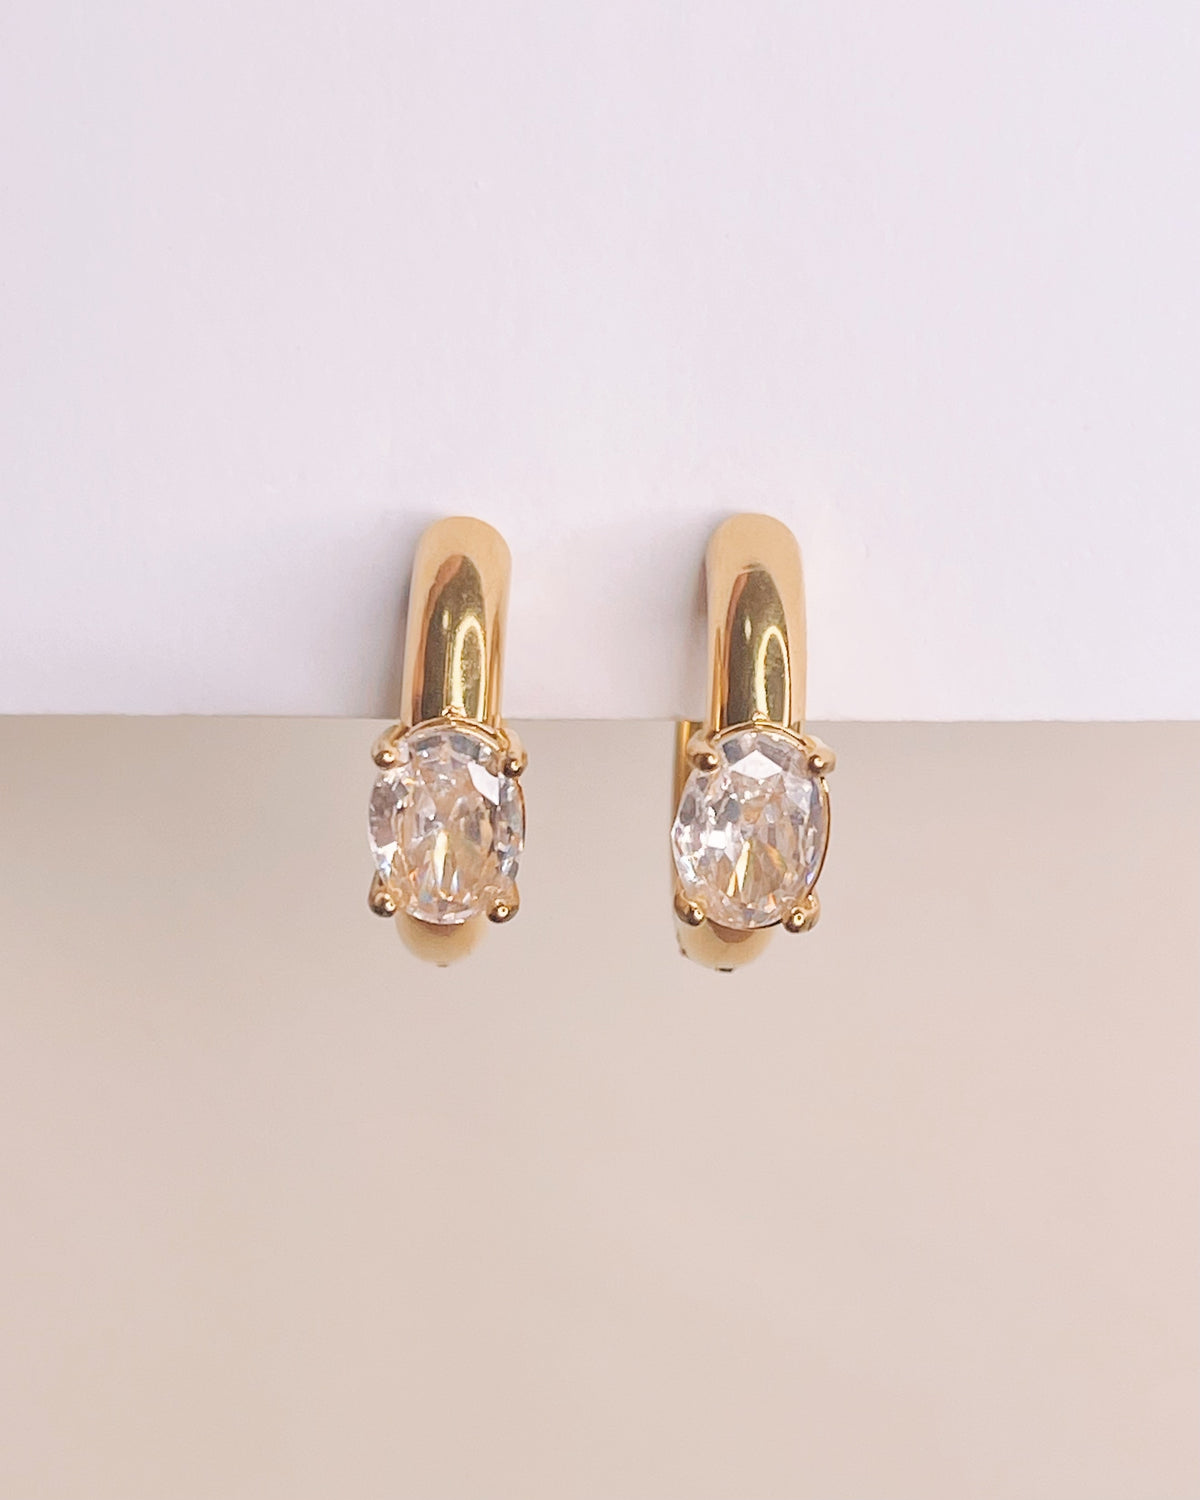 Rayna Ring Design Crowned Zircon Gold Huggies